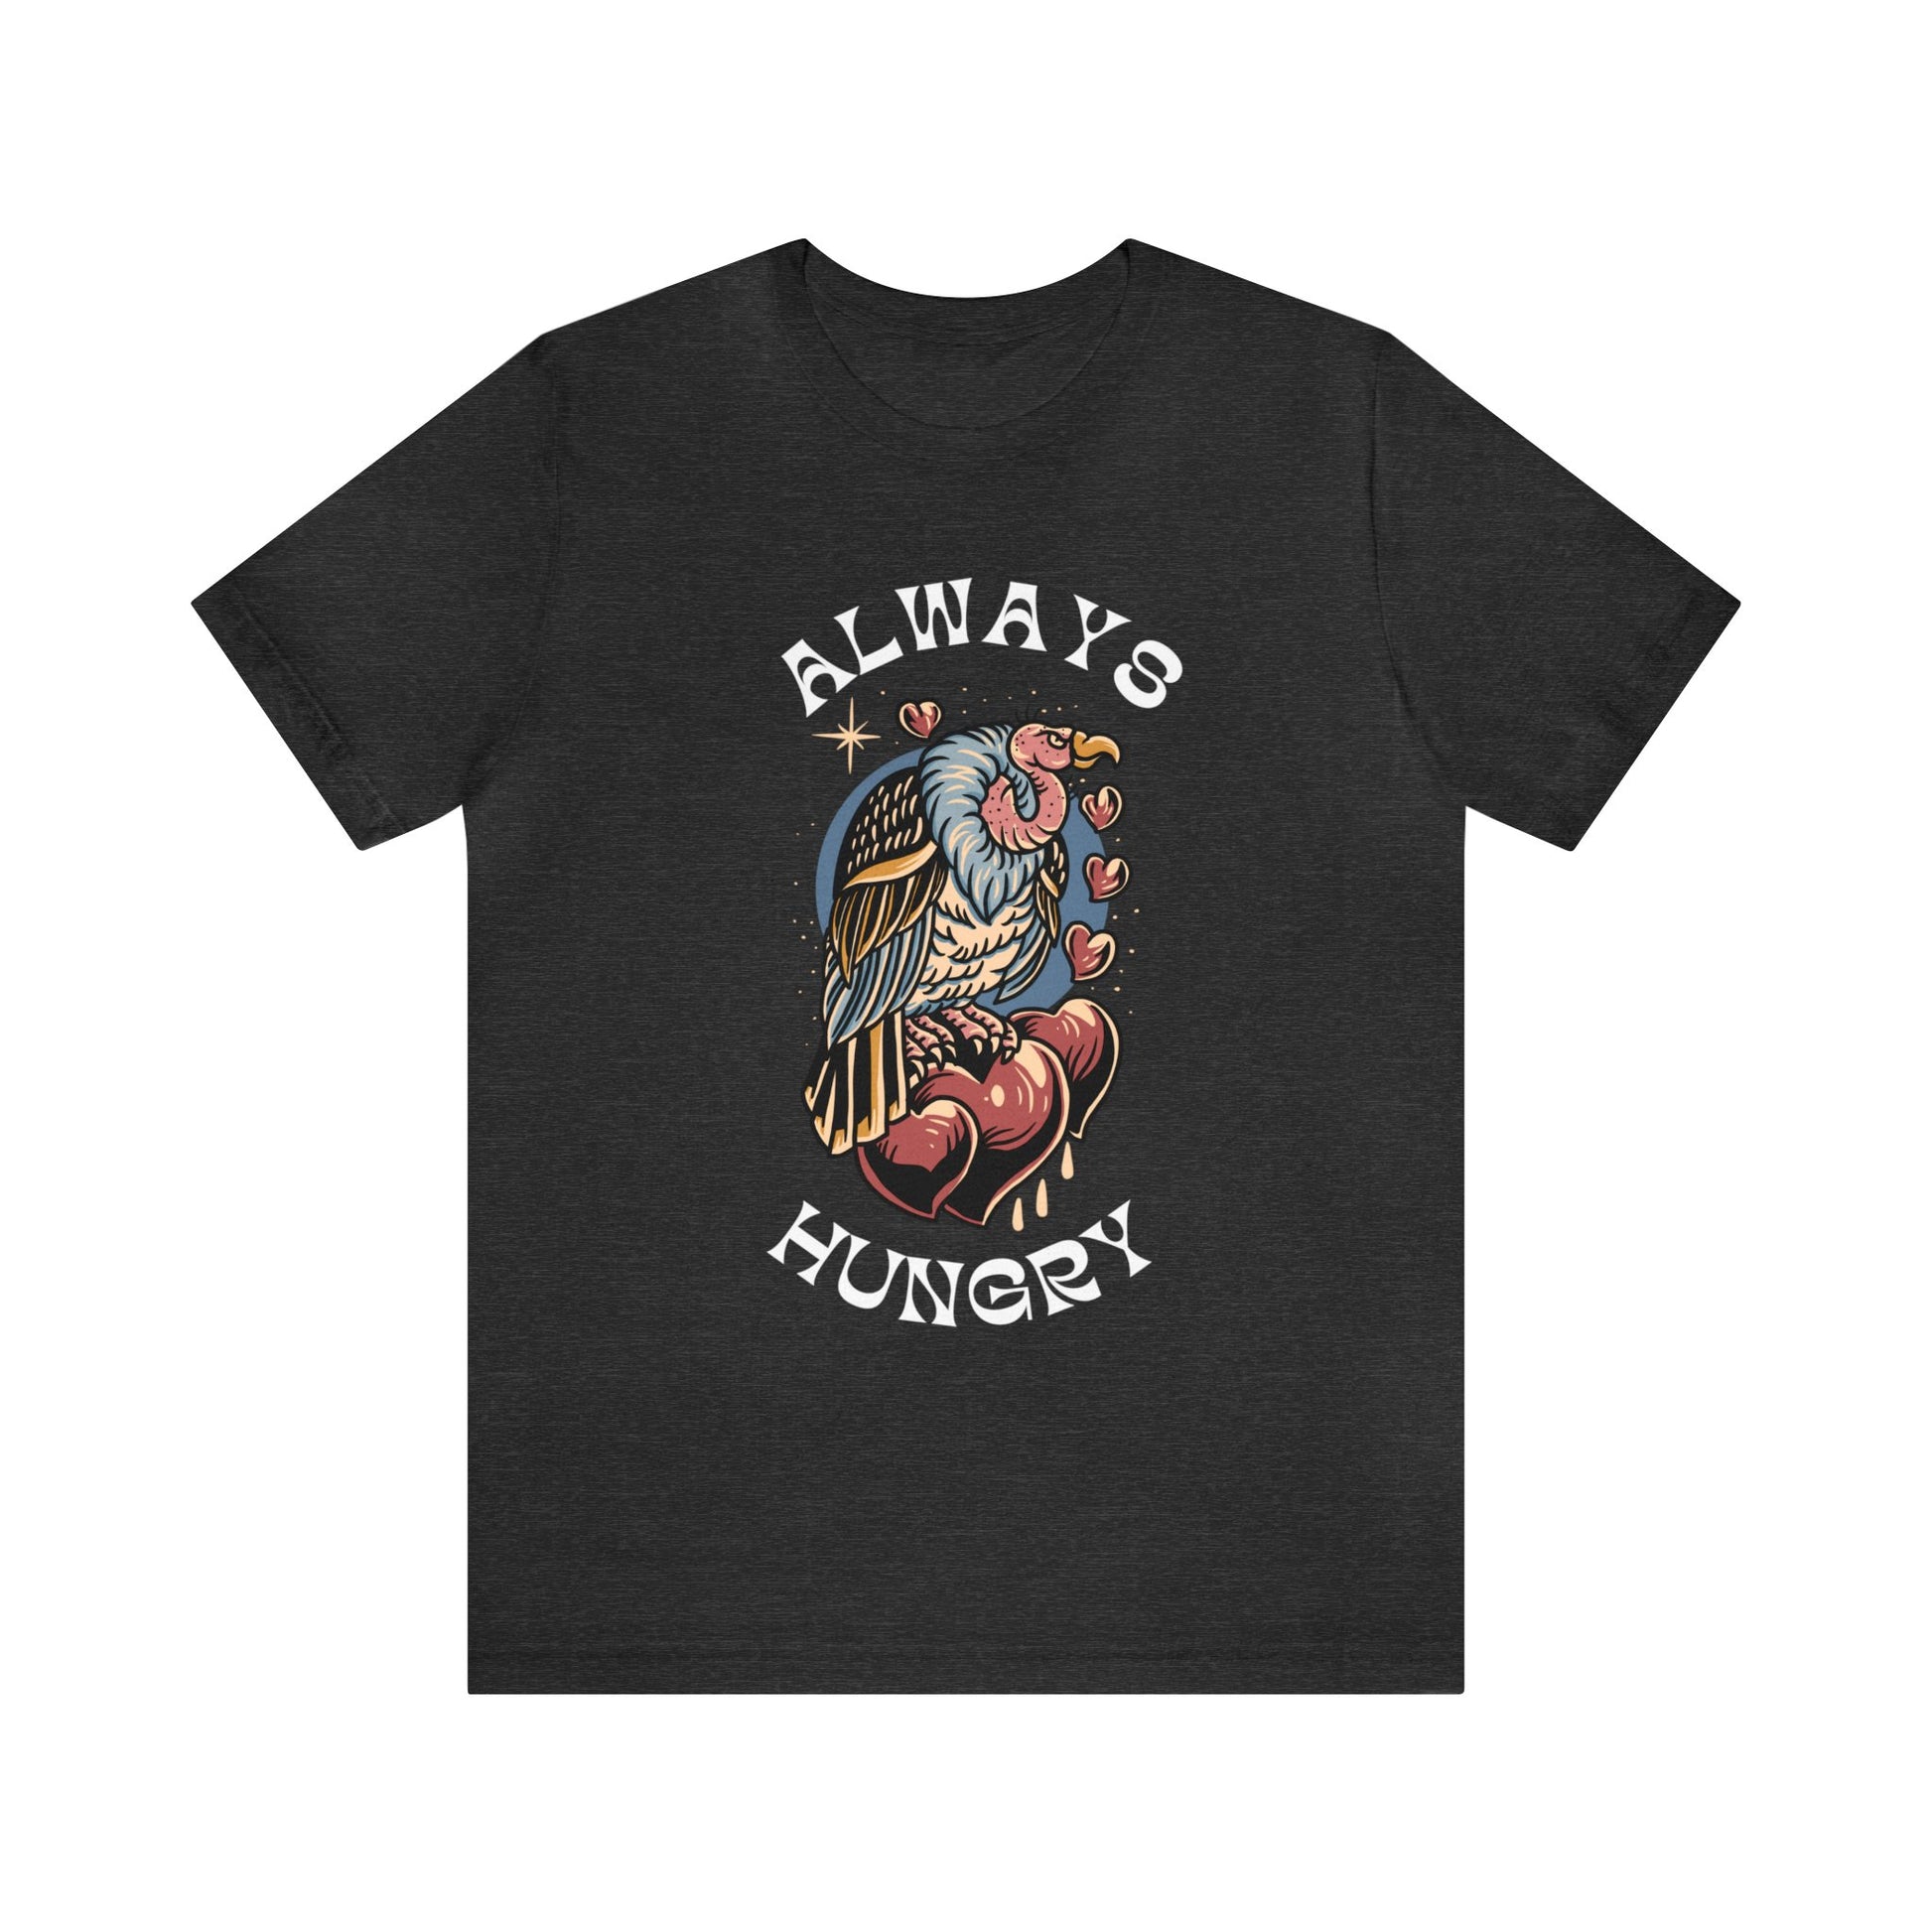 Always Hungry Vulture Hearts Tattoo T-shirt / Dark Cloud Lightning Eye Unisex Traditional Tattoo Tee Shirt / Punk Rock Clothing Tshirt - Foxlark Crystal Jewelry